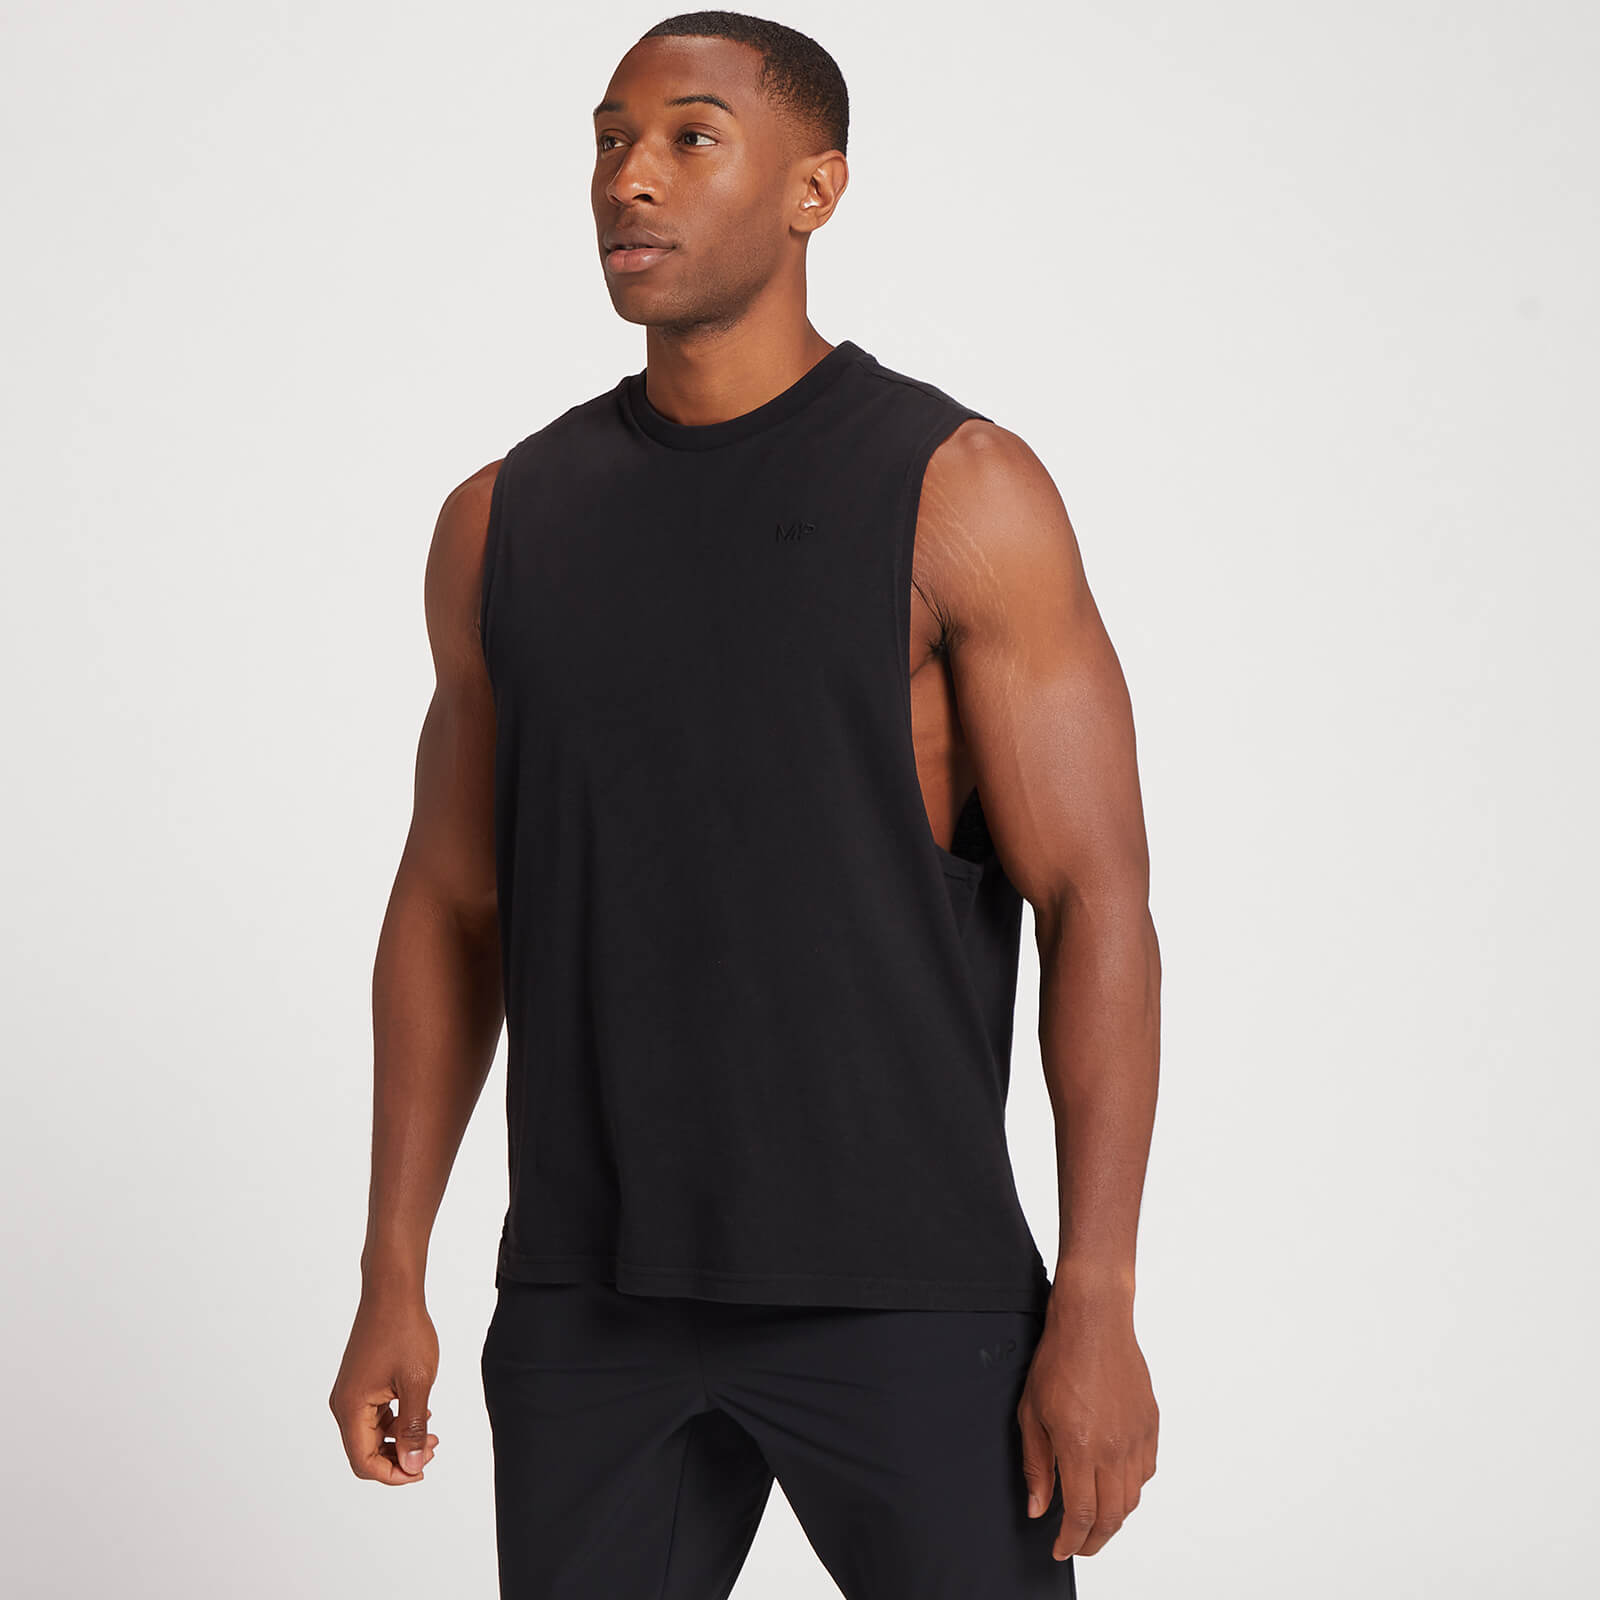 Camiseta de entrenamiento de tirantes con sisas caídas Dynamic para hombre de MP - Negro lavado - XS